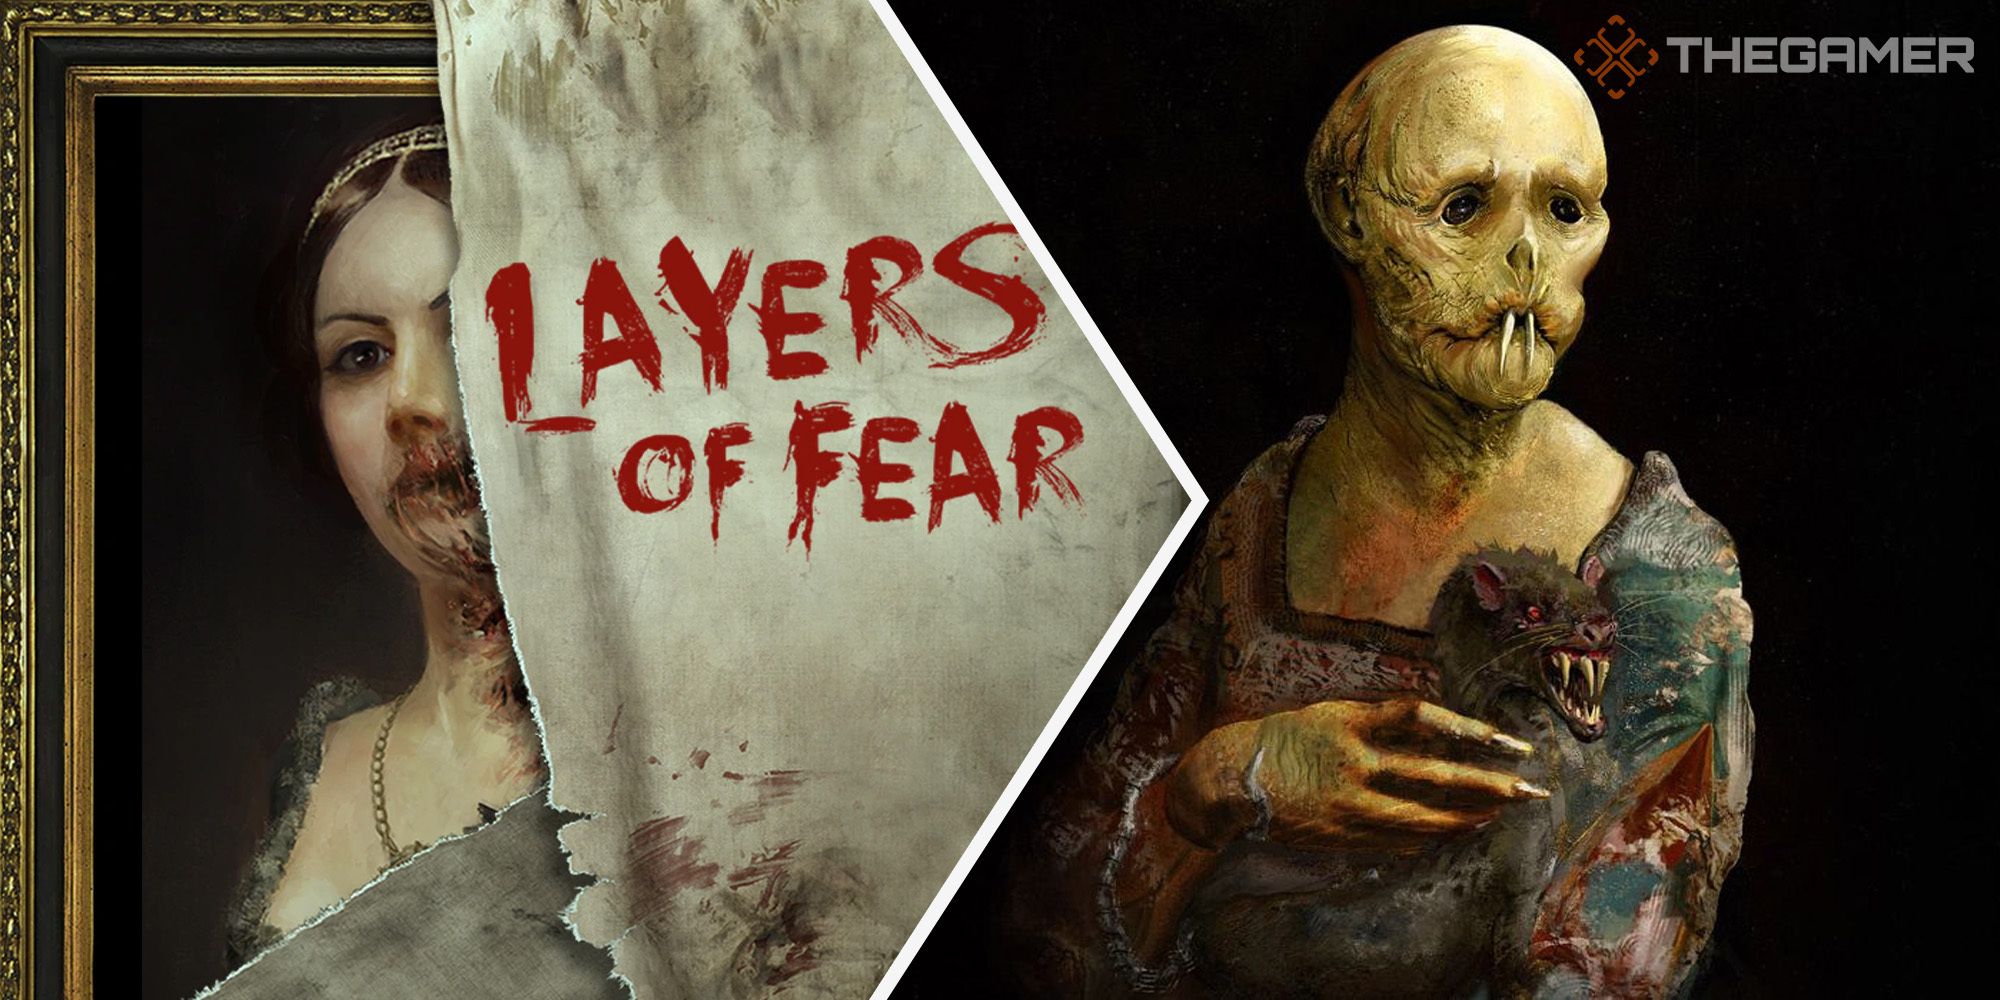 Layers of Fear: Inheritance DLC - Full Playthrough (Indie horror gameplay /  walkthrough) 